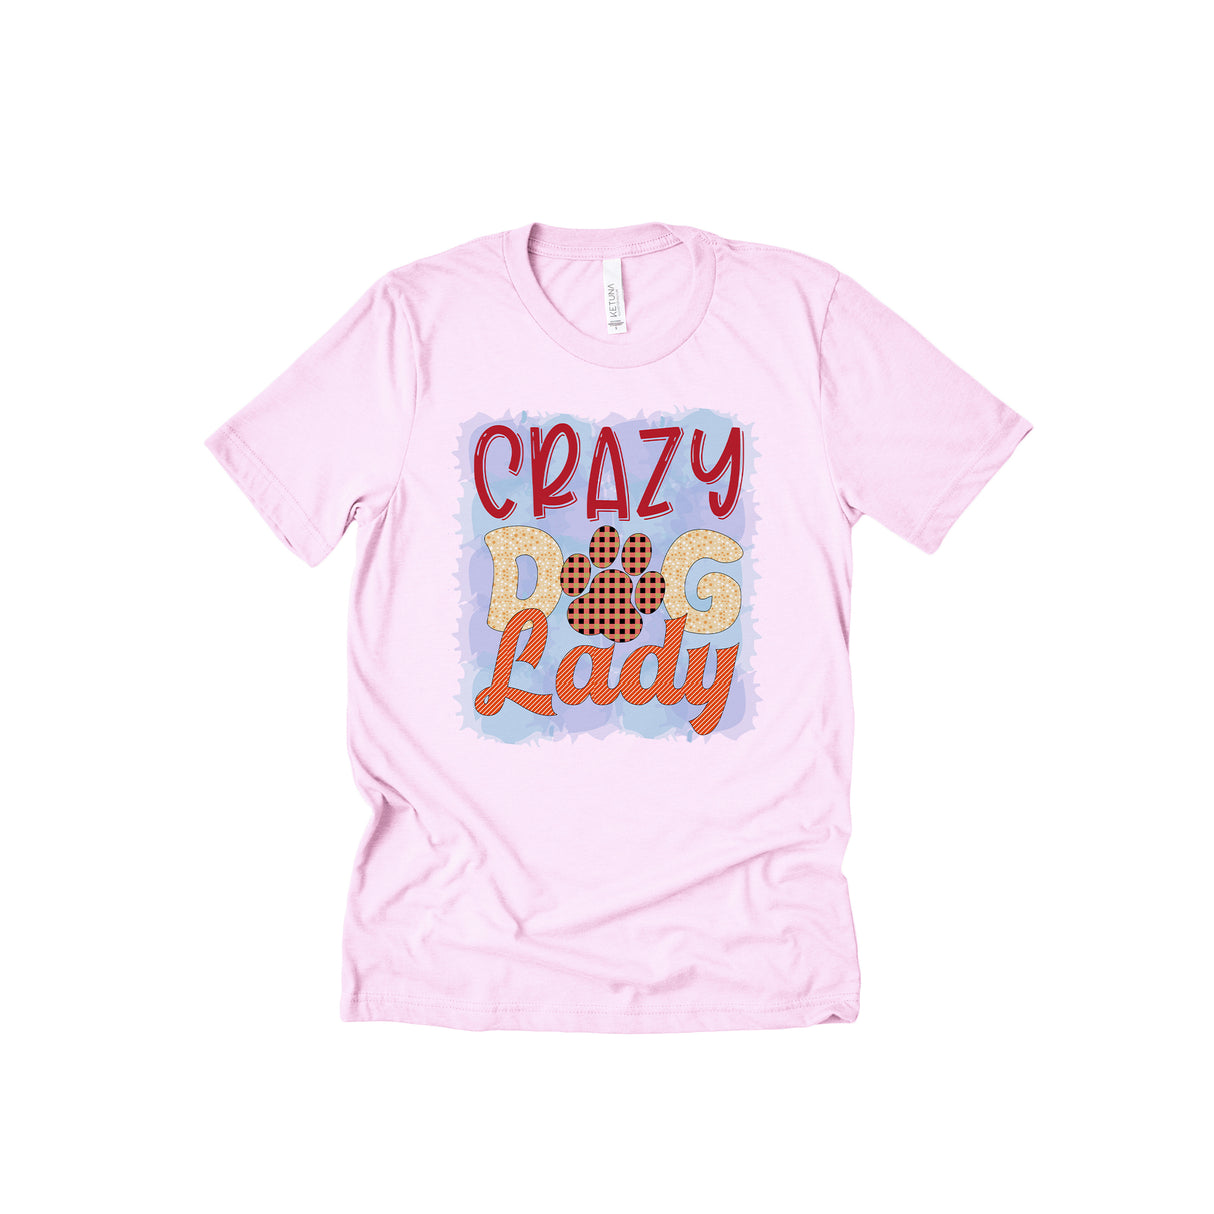 Crazy Dog Lady Adult T-Shirt